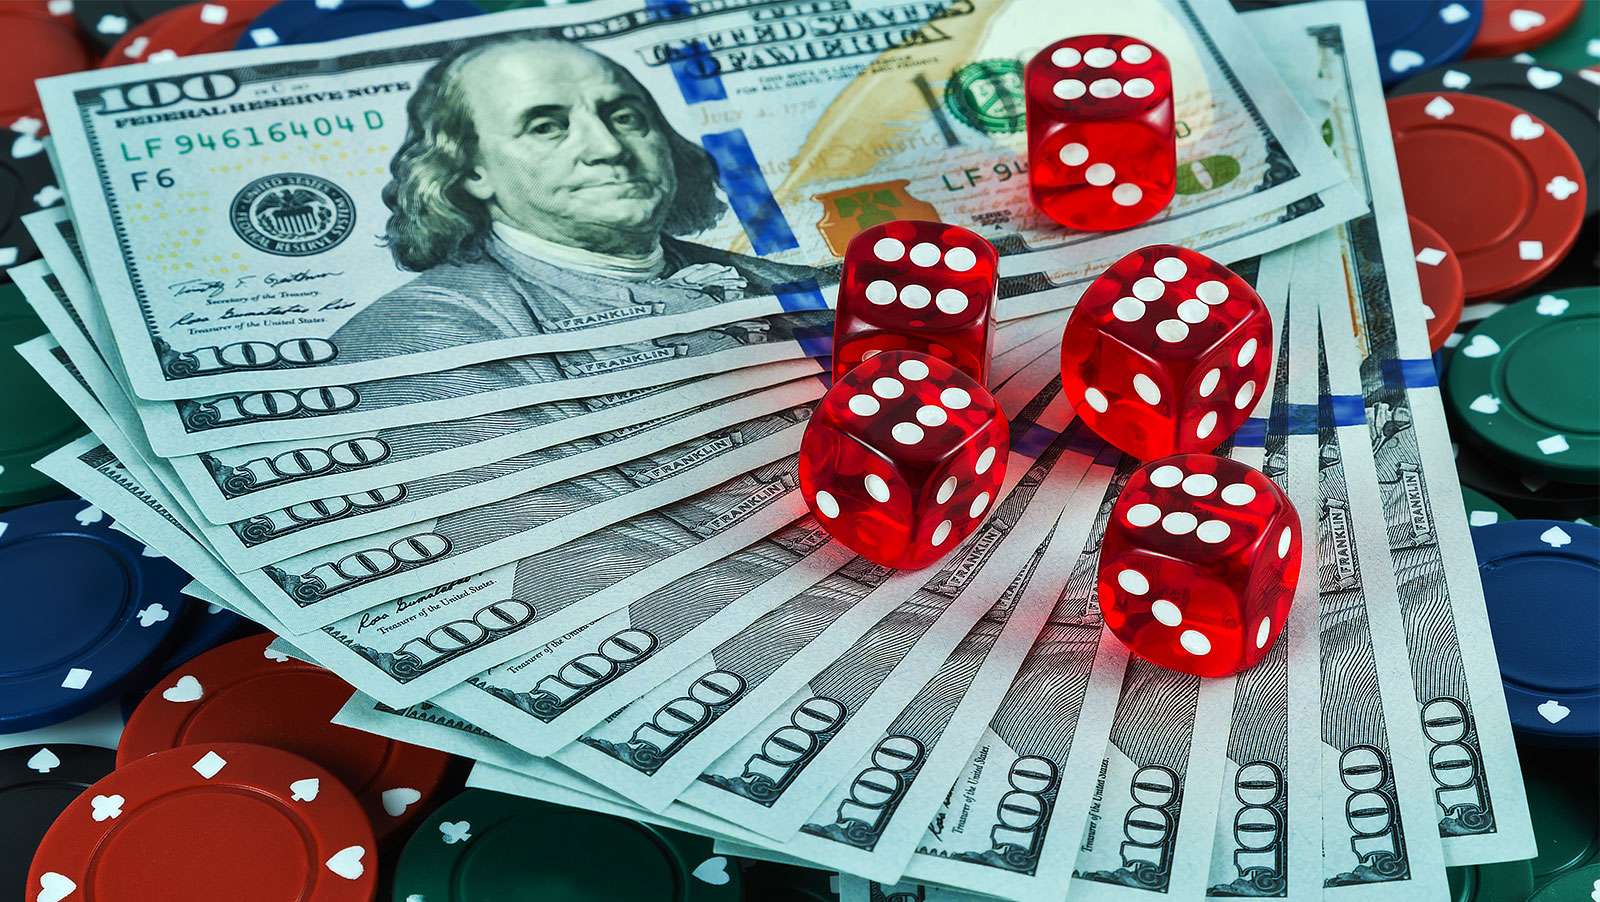 Gambling guide to make money online | Live Casino Sverige